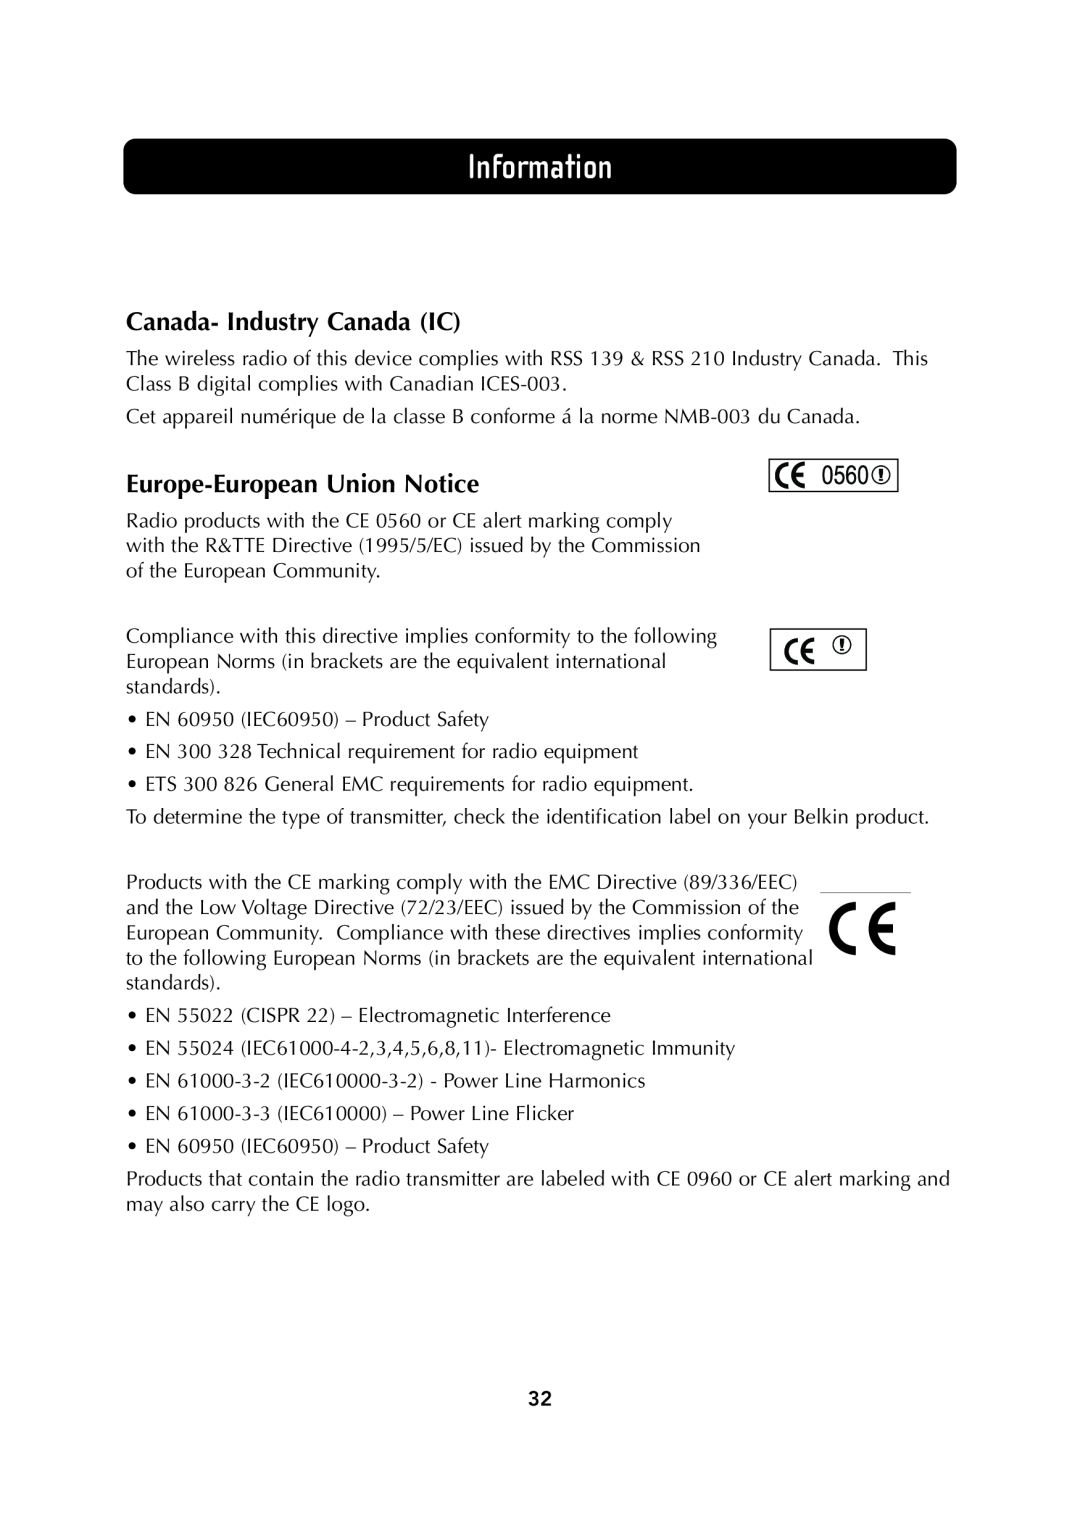 Belkin F5D6130 user manual Canada- Industry Canada IC, Europe-European Union Notice, Information 